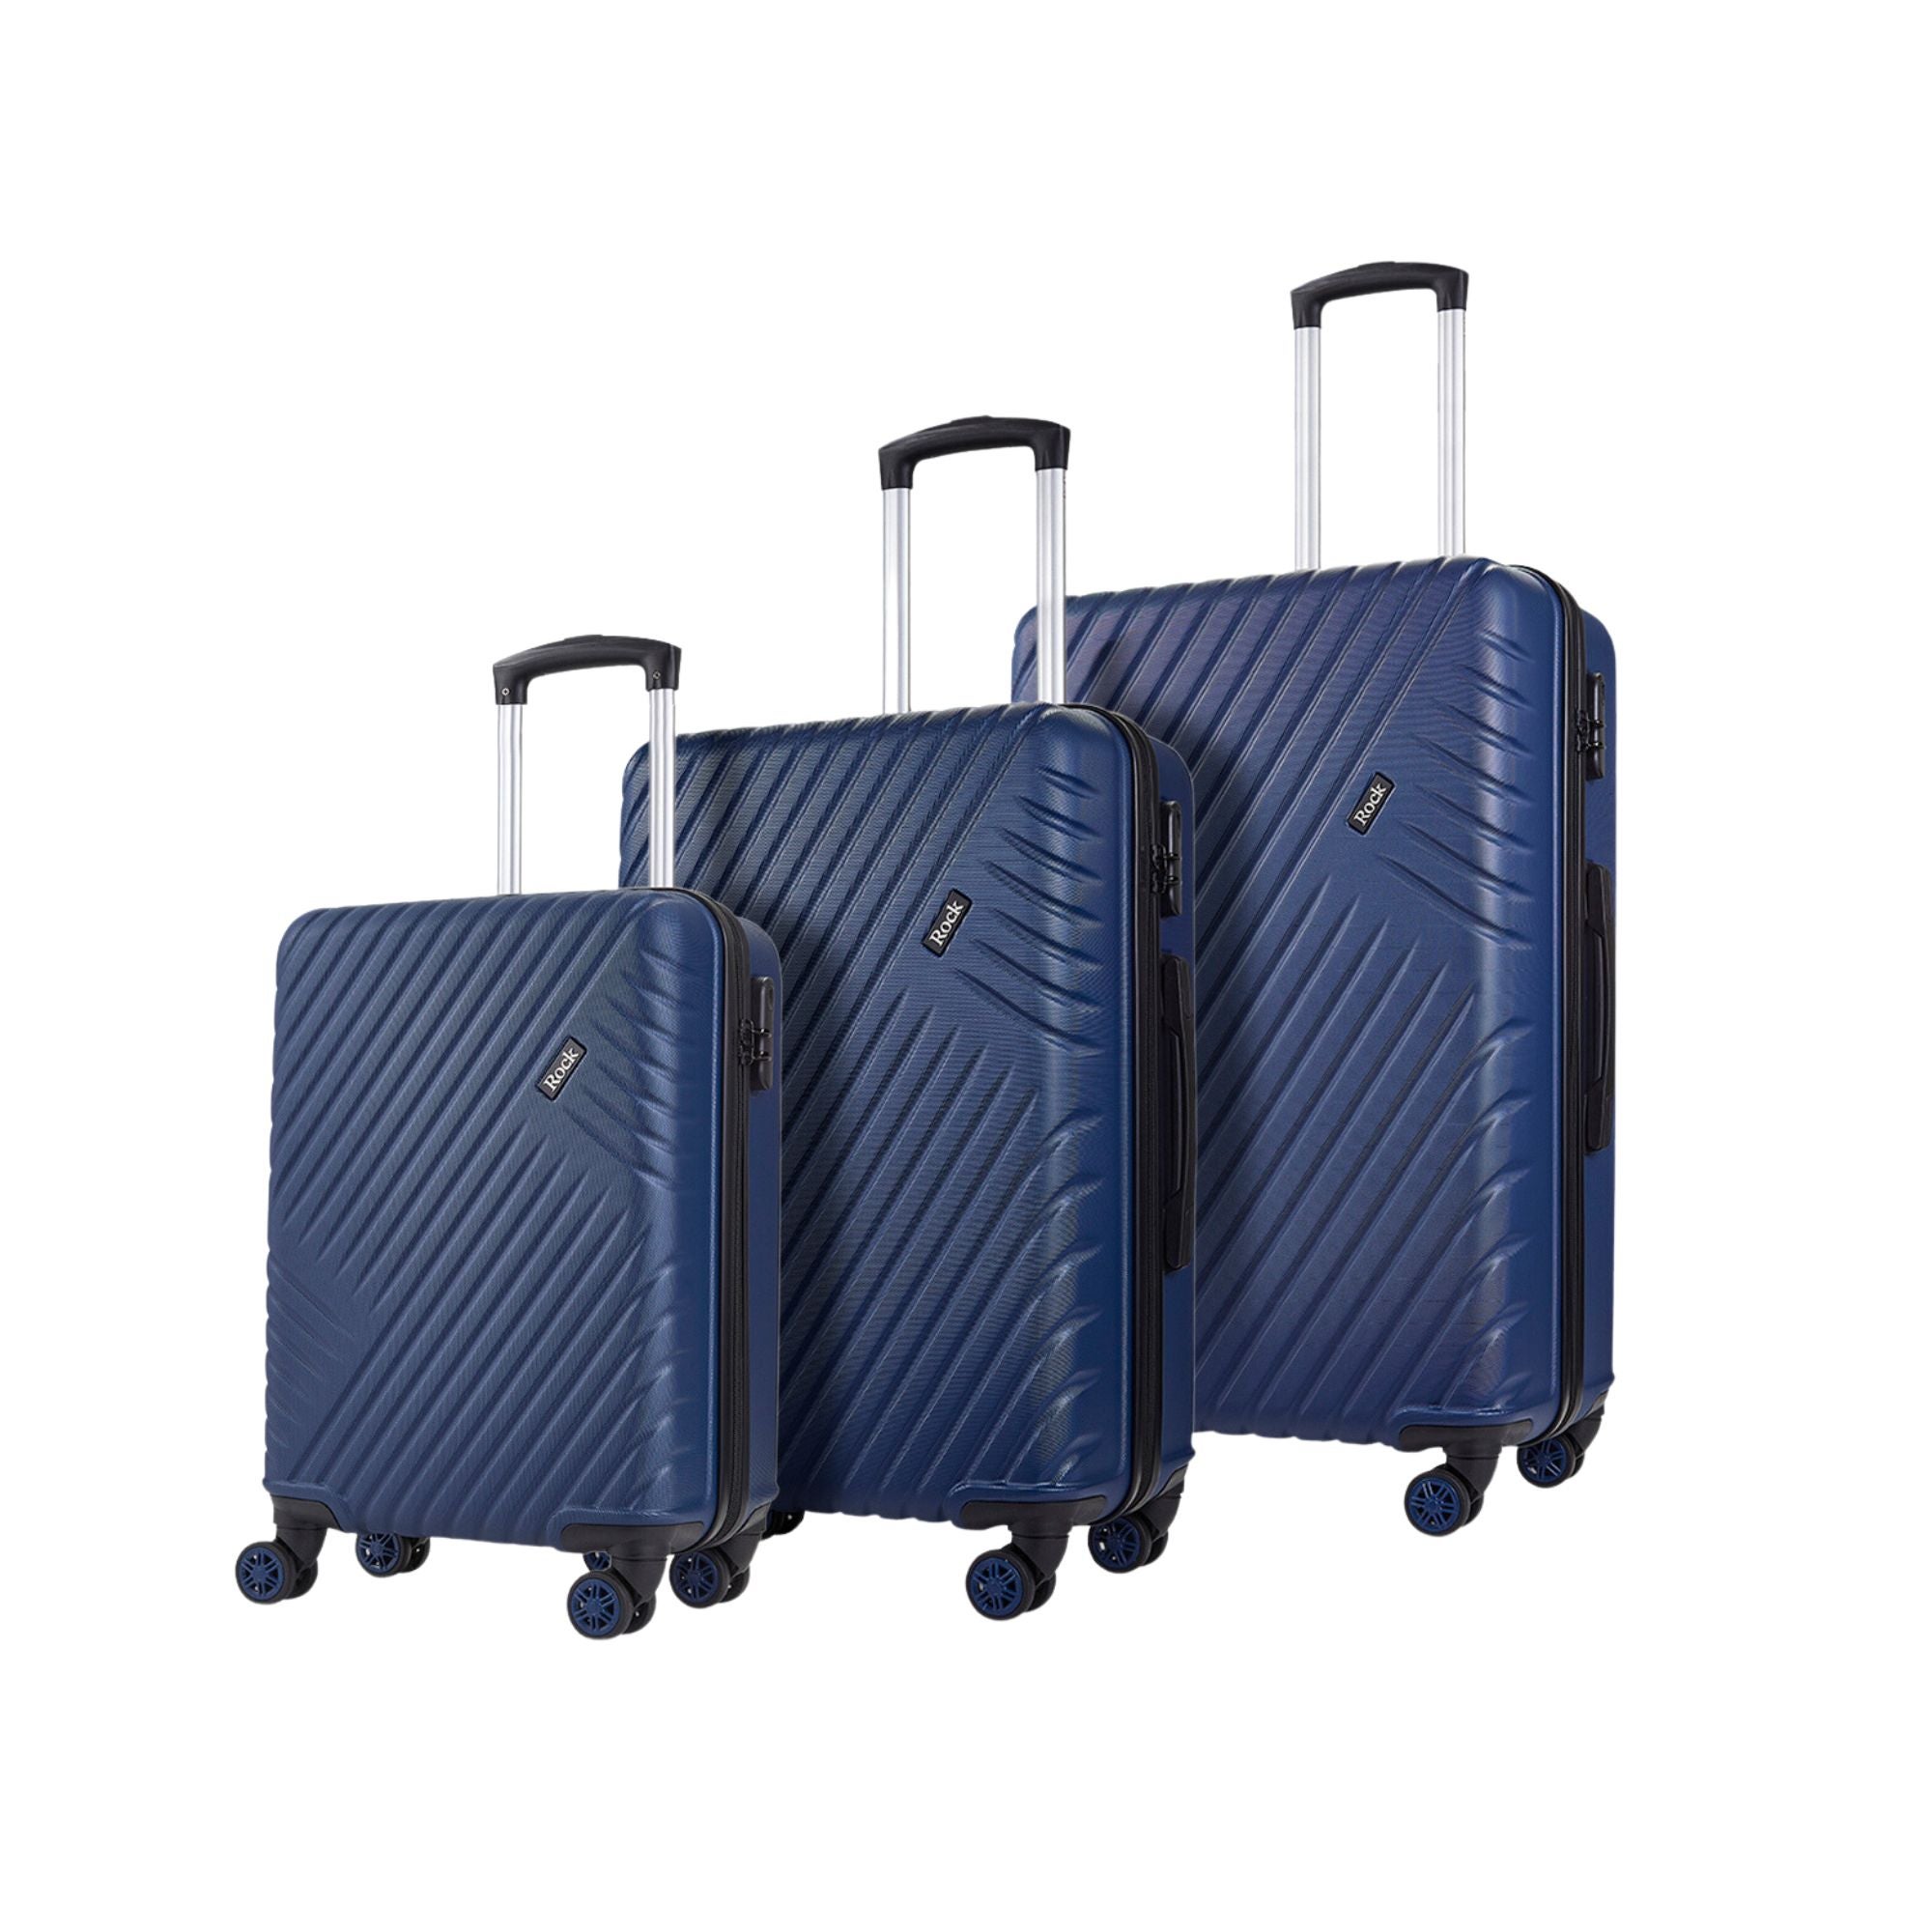 Rock Luggage Santiago Set of 3 Suitcases